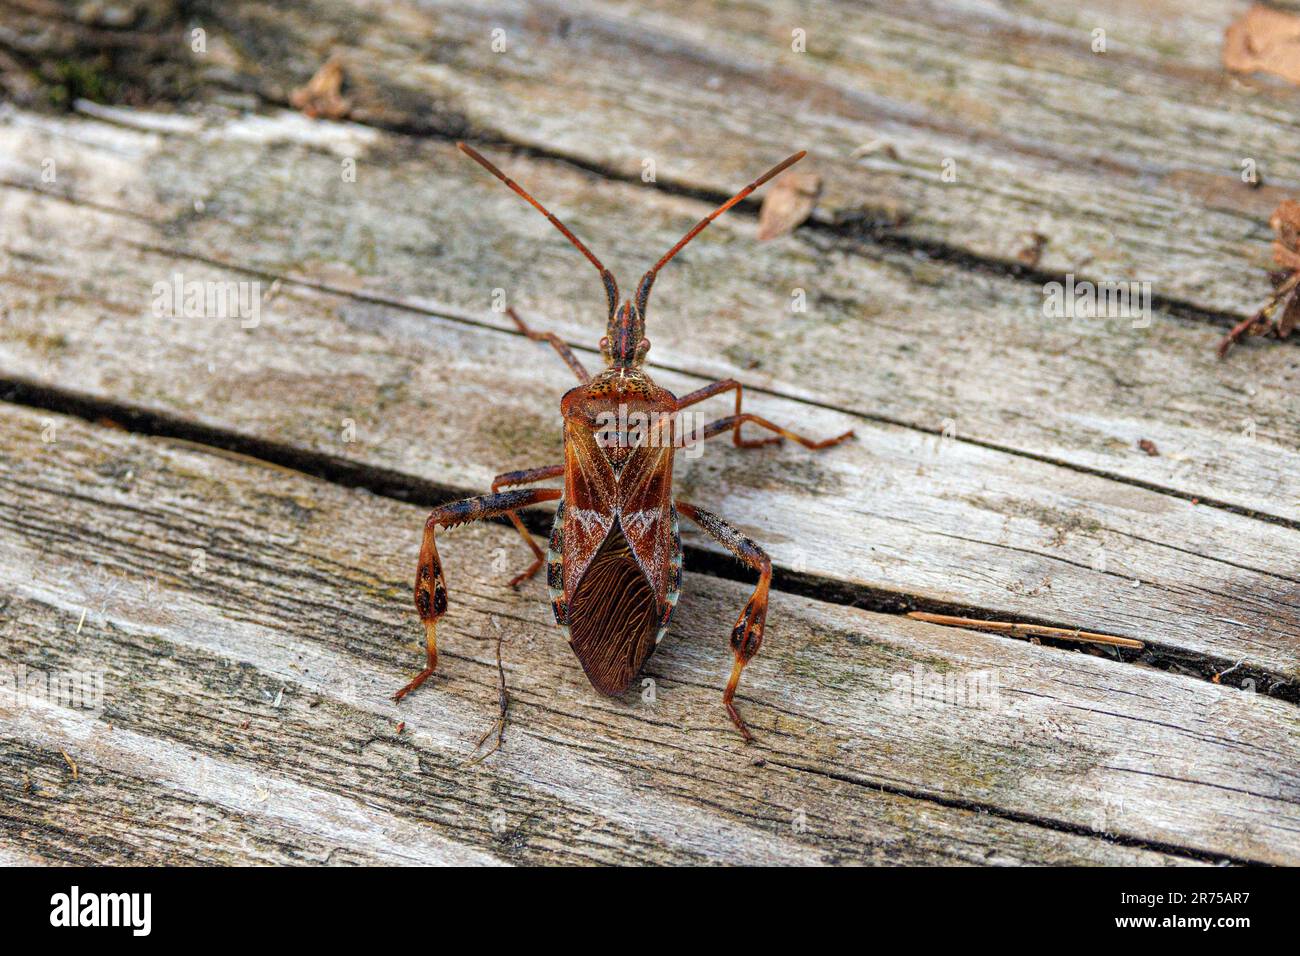 Western conifer seed bug (Leptoglossus occidentalis), on dead wood, Germany, Bavaria, Grundlossee Stock Photo